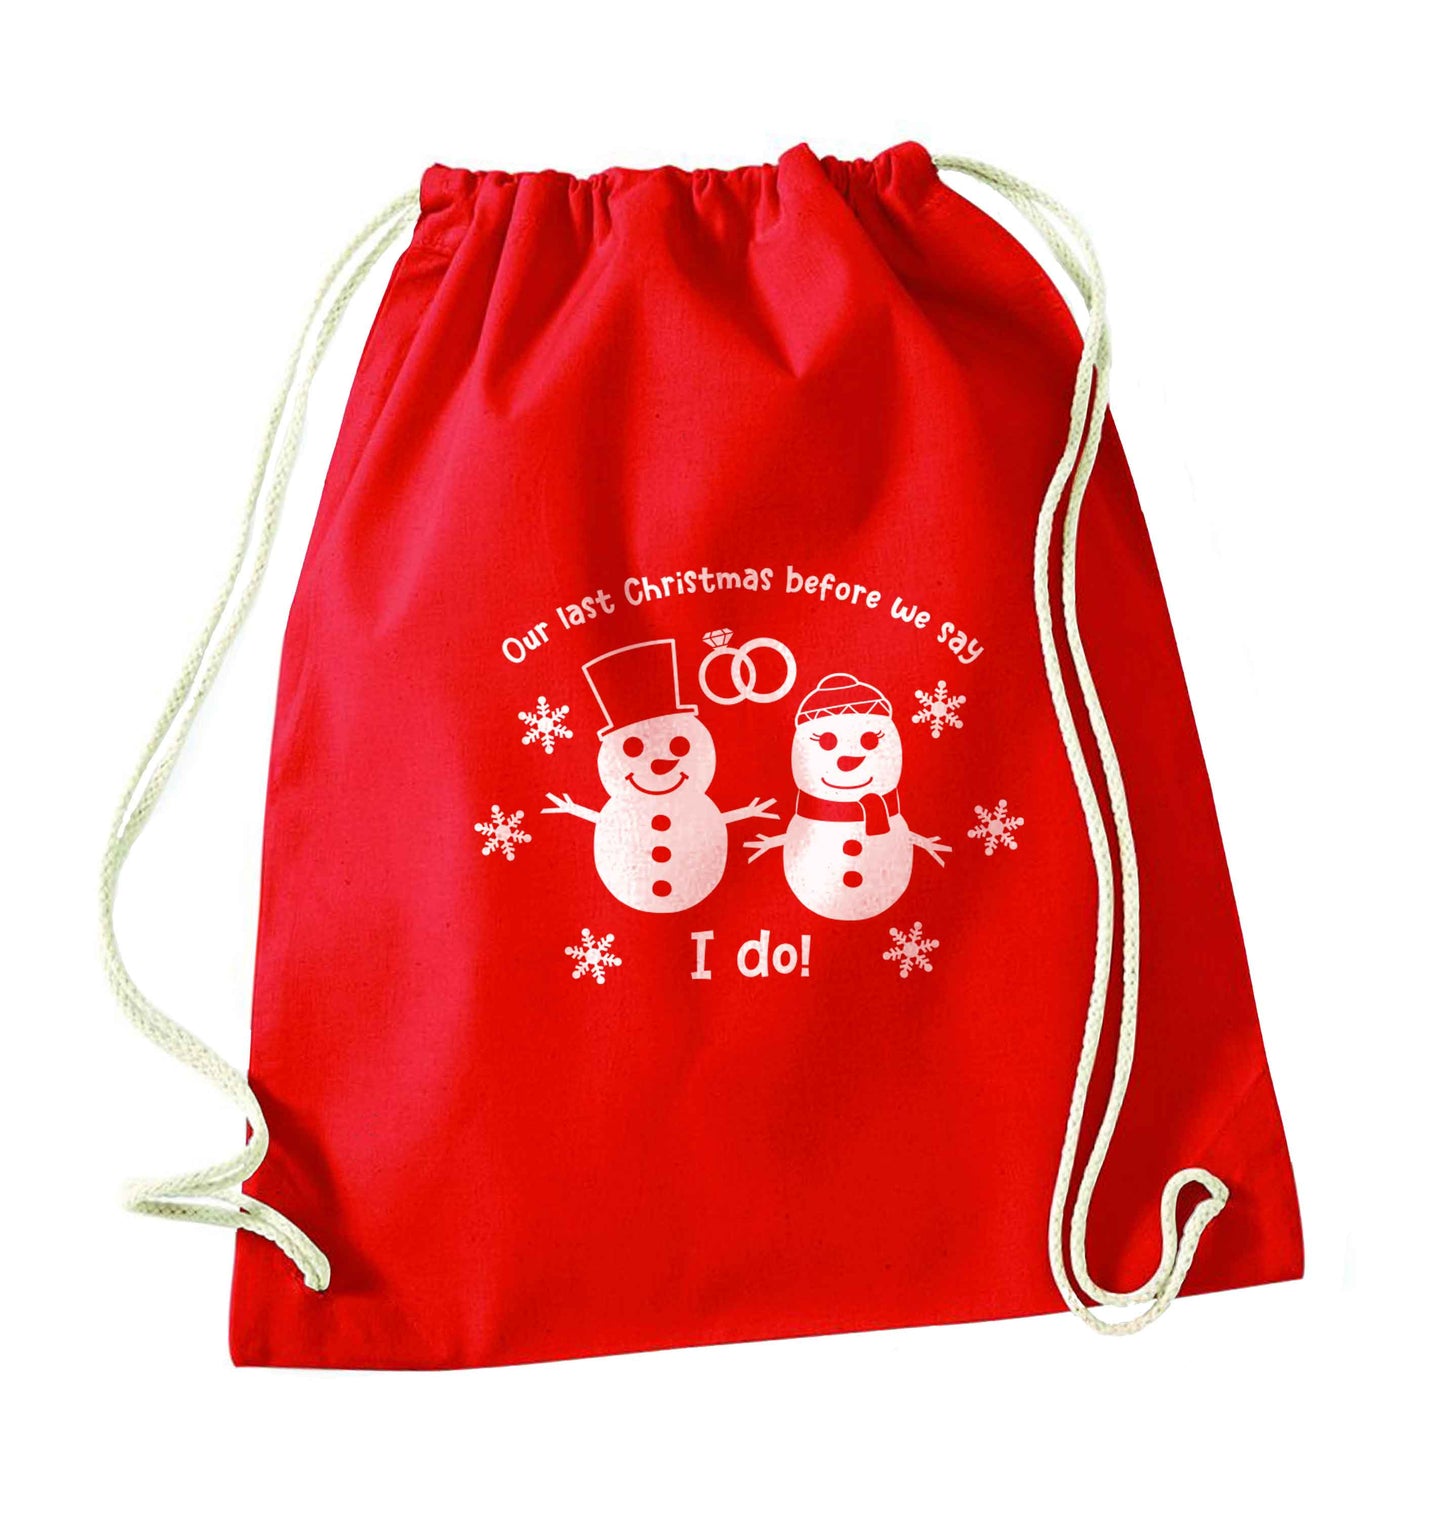 Last Christmas before we say I do red drawstring bag 